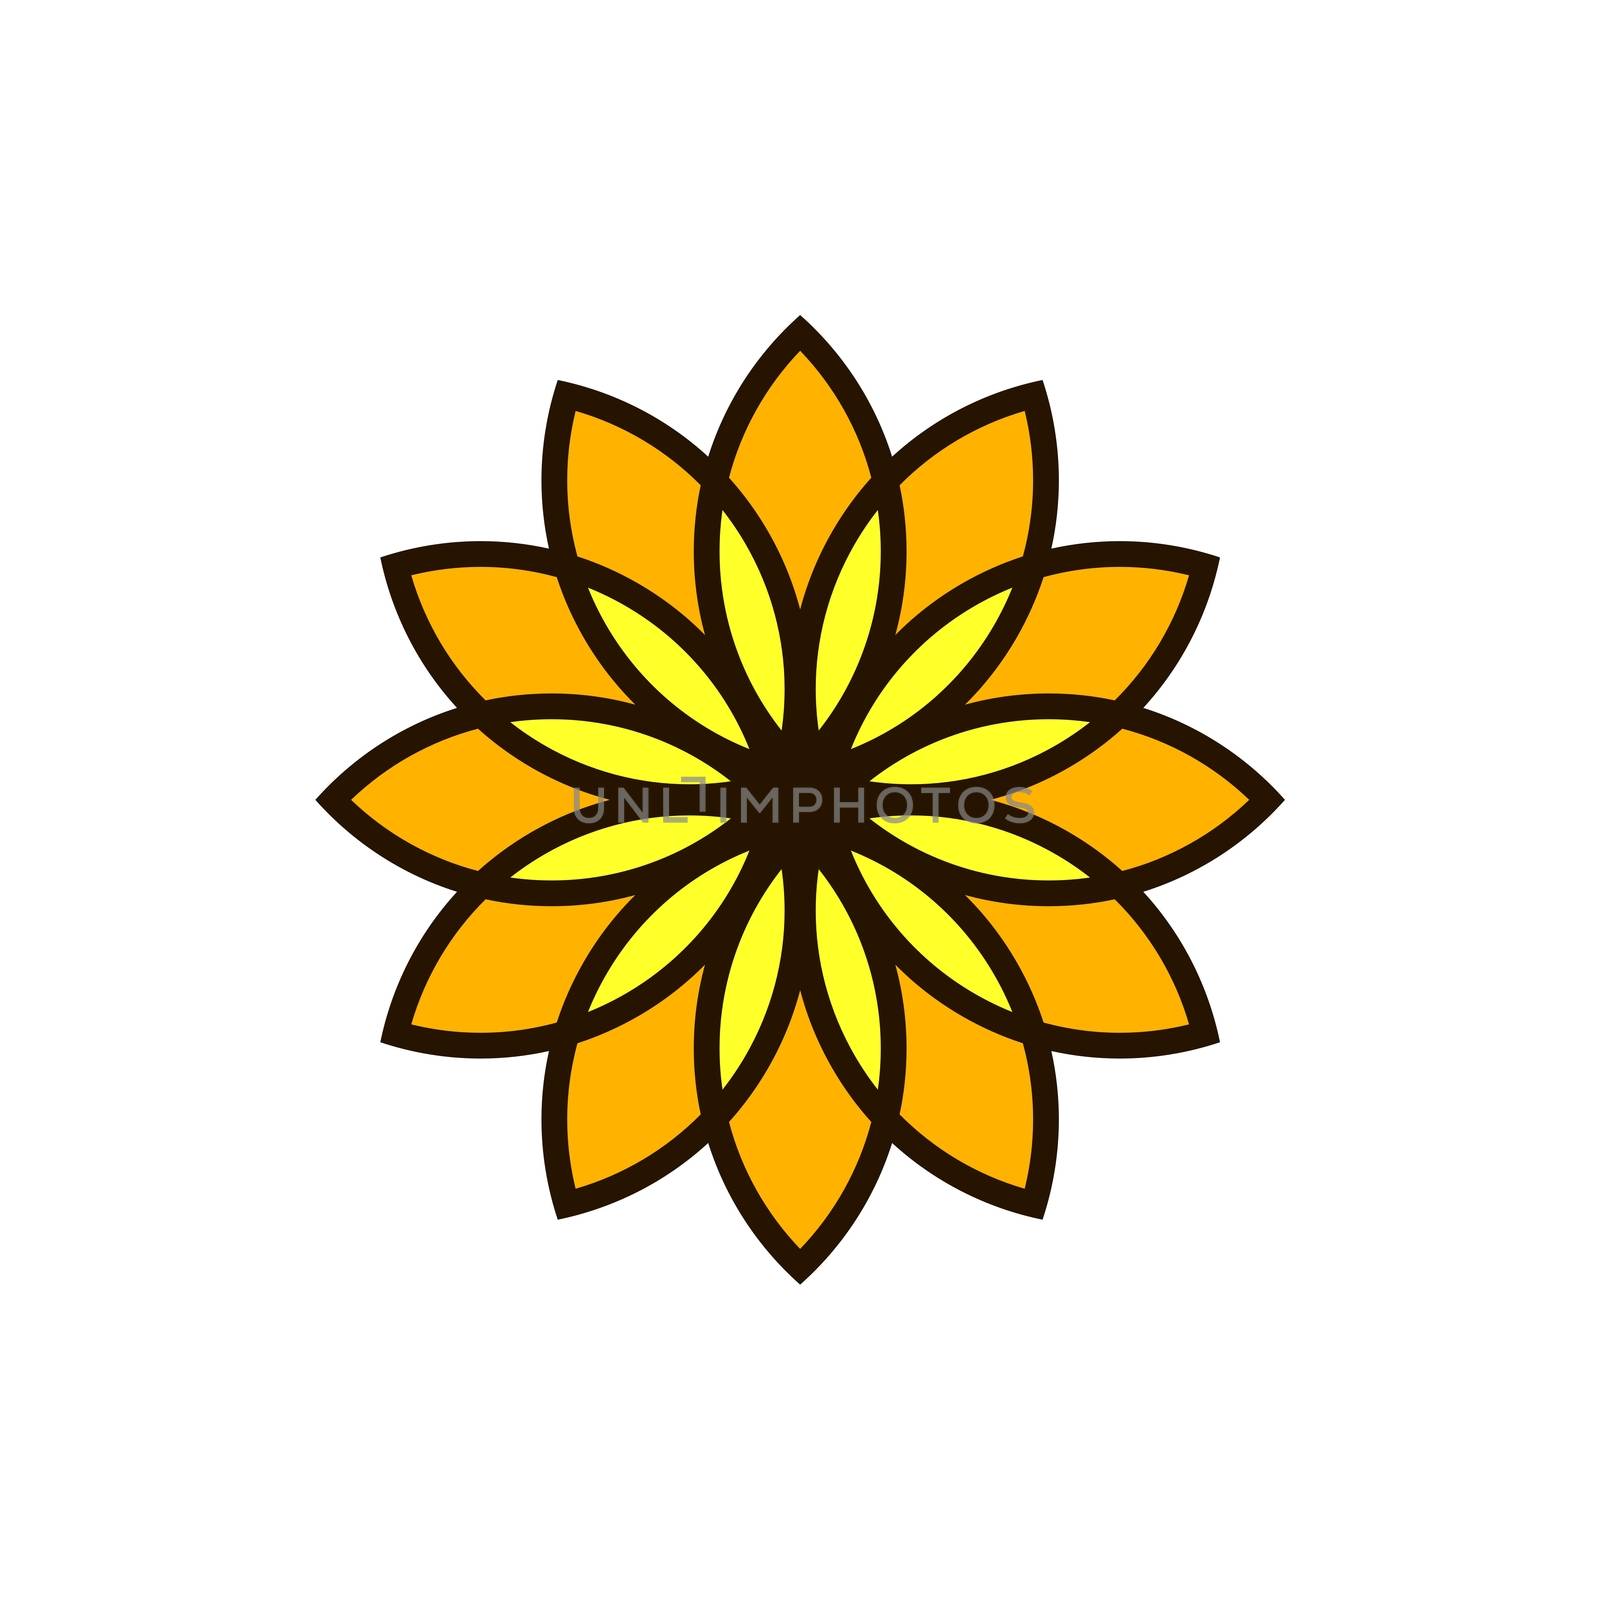 Abstract Sun Flower Logo Template Illustration Design EPS 10 by soponyono1